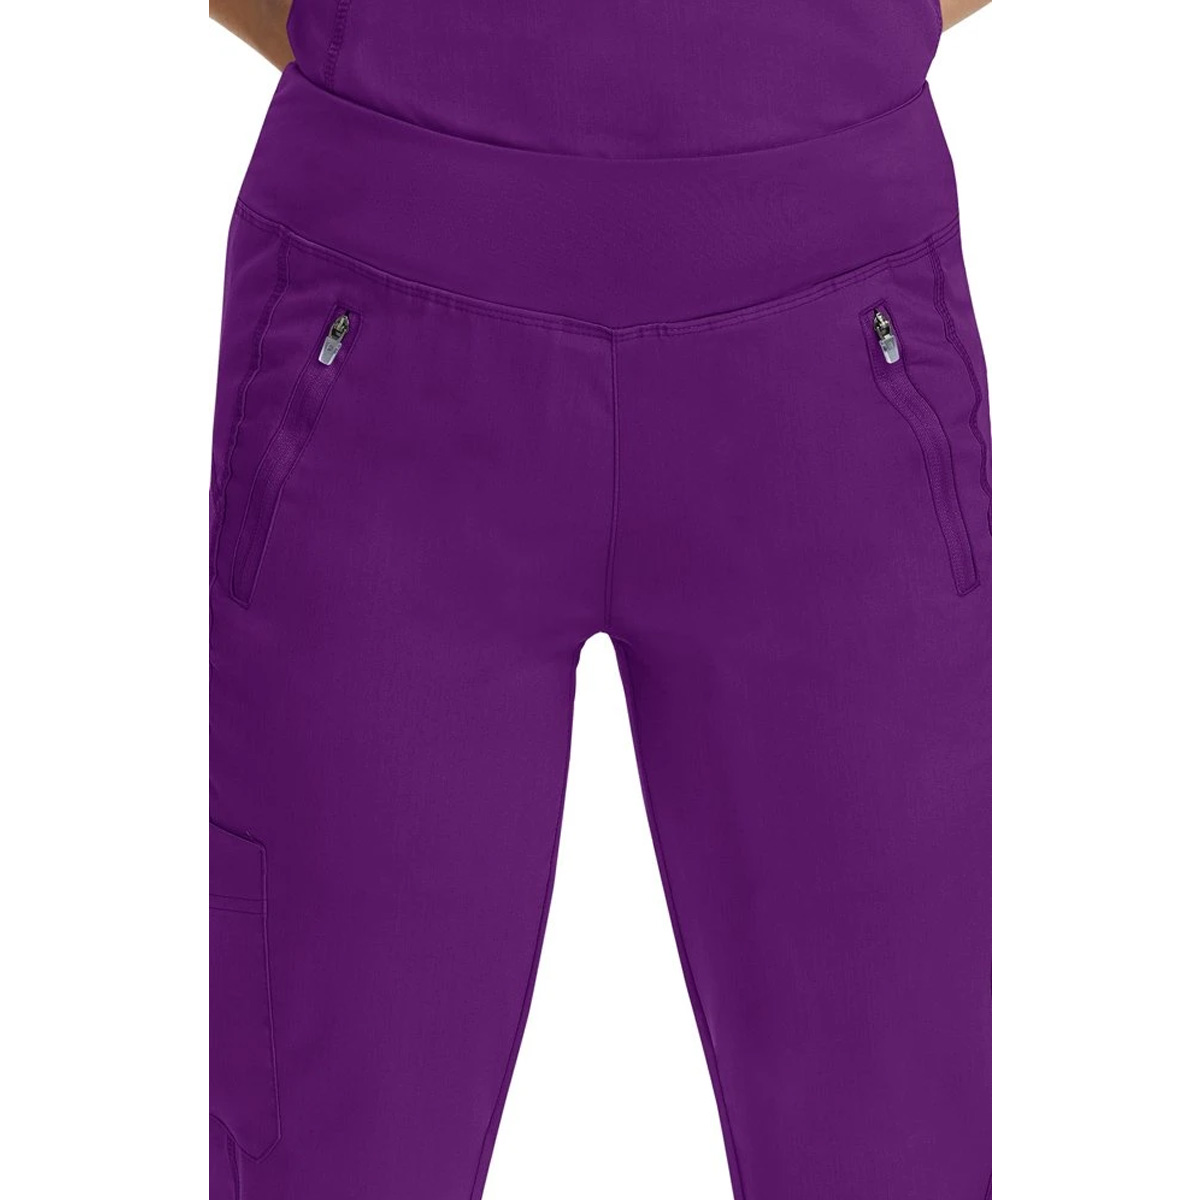 Healing Hands Purple Label Tara PETITE Jogger Cargo Pants, Scrub Pants